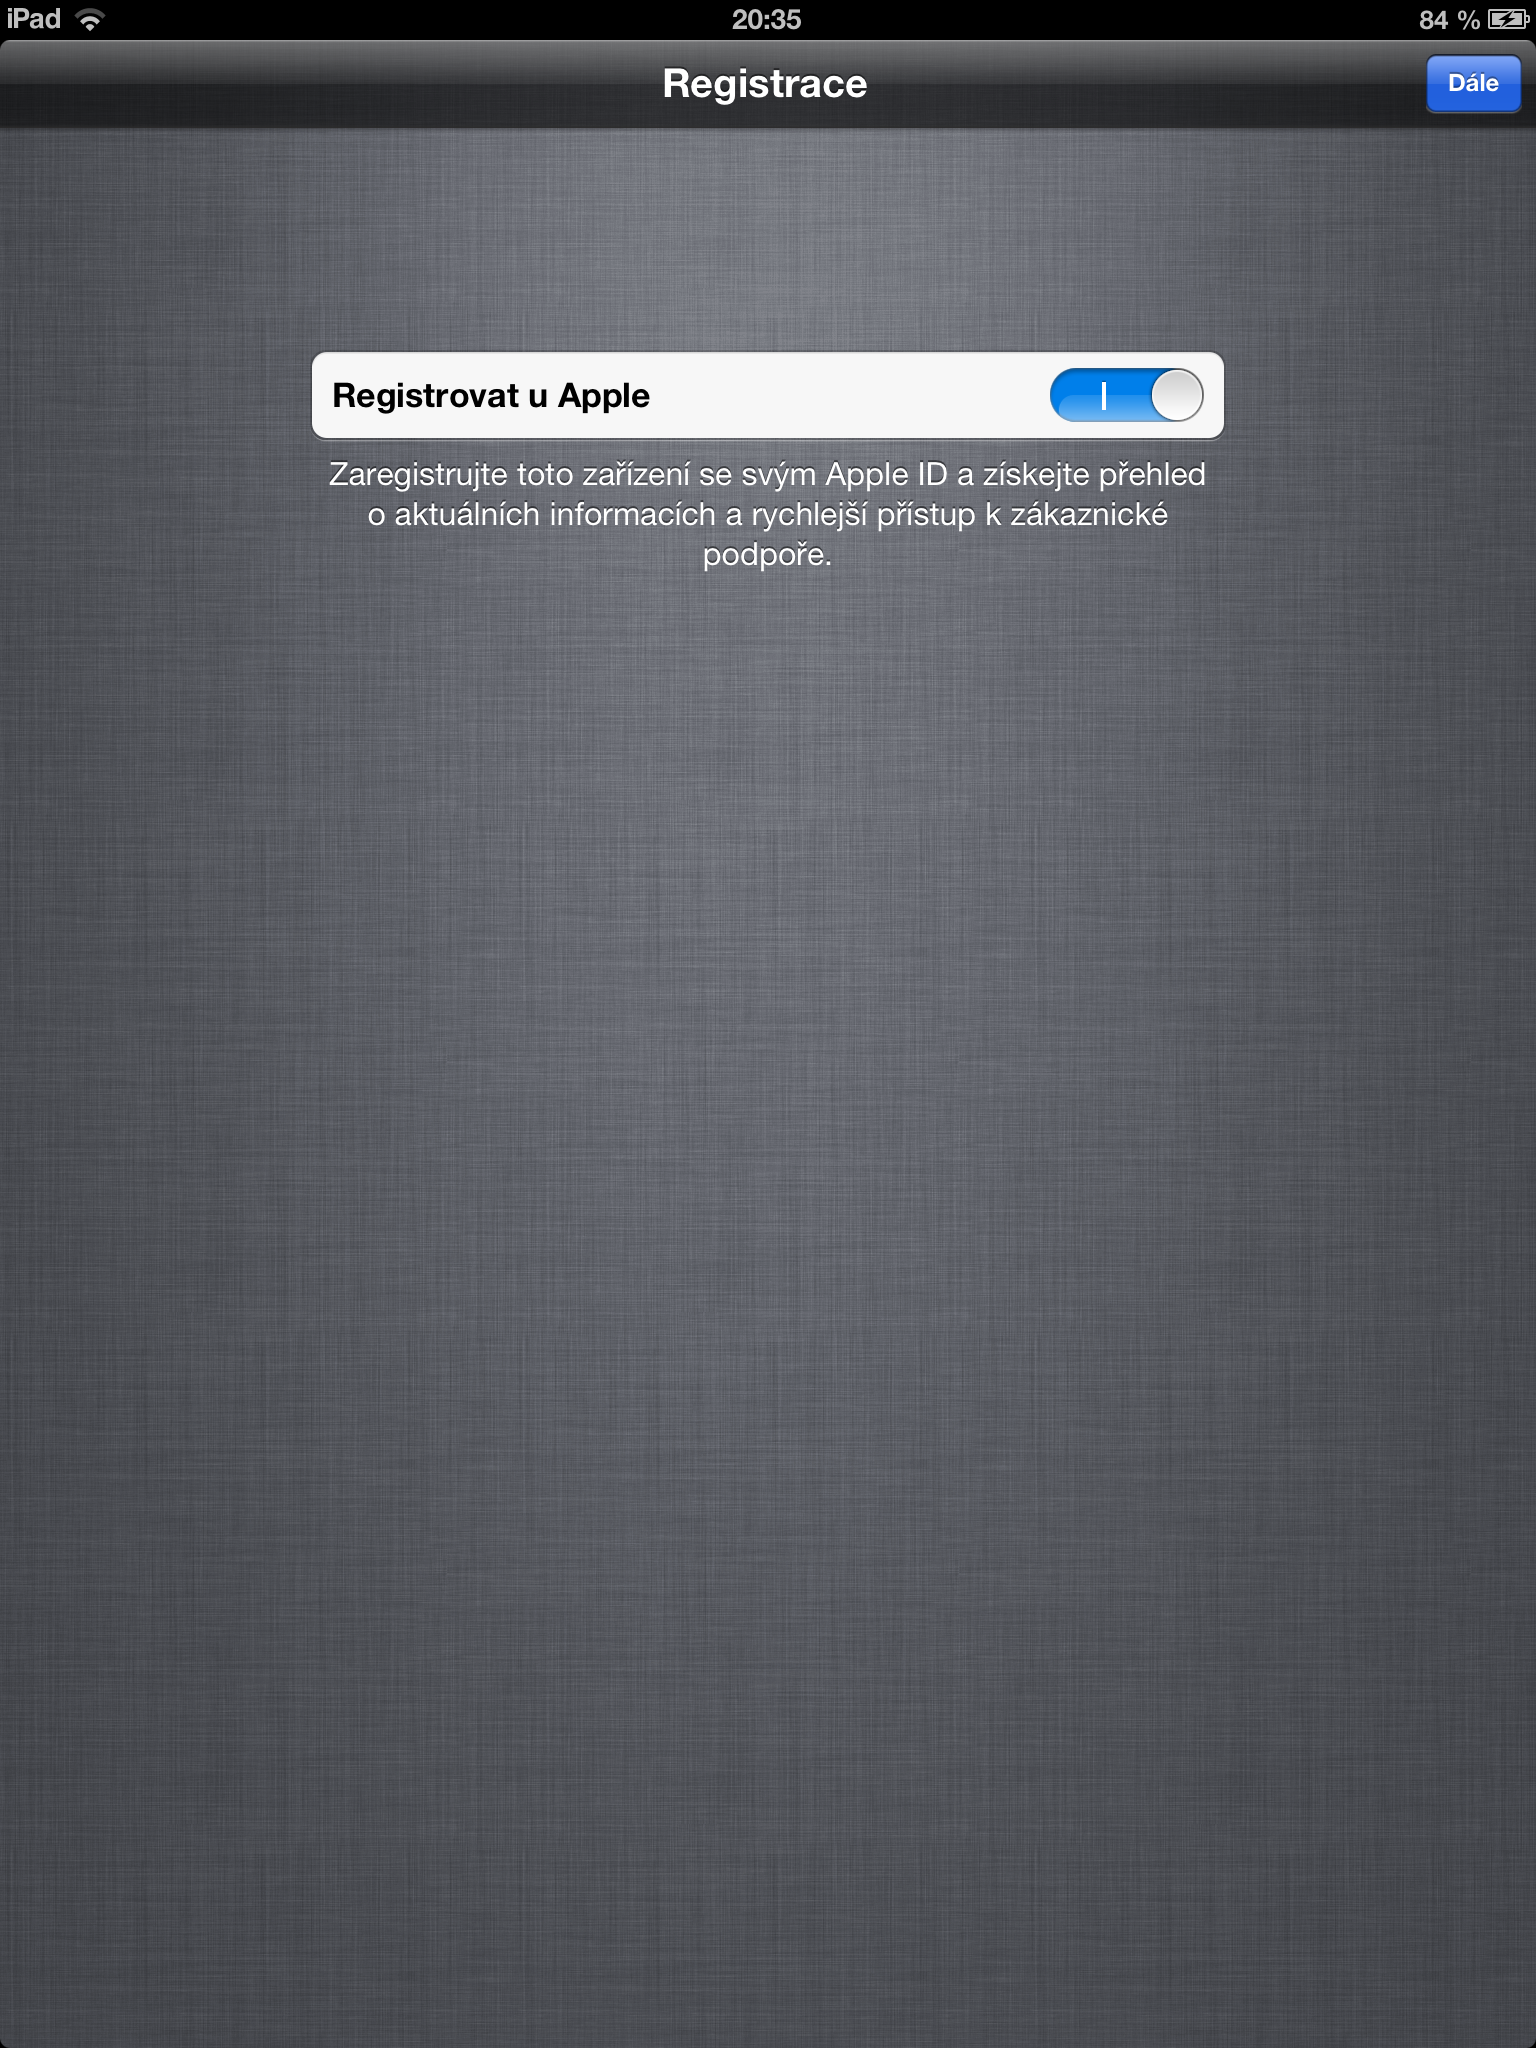 iPad: aktualizace iOS 6